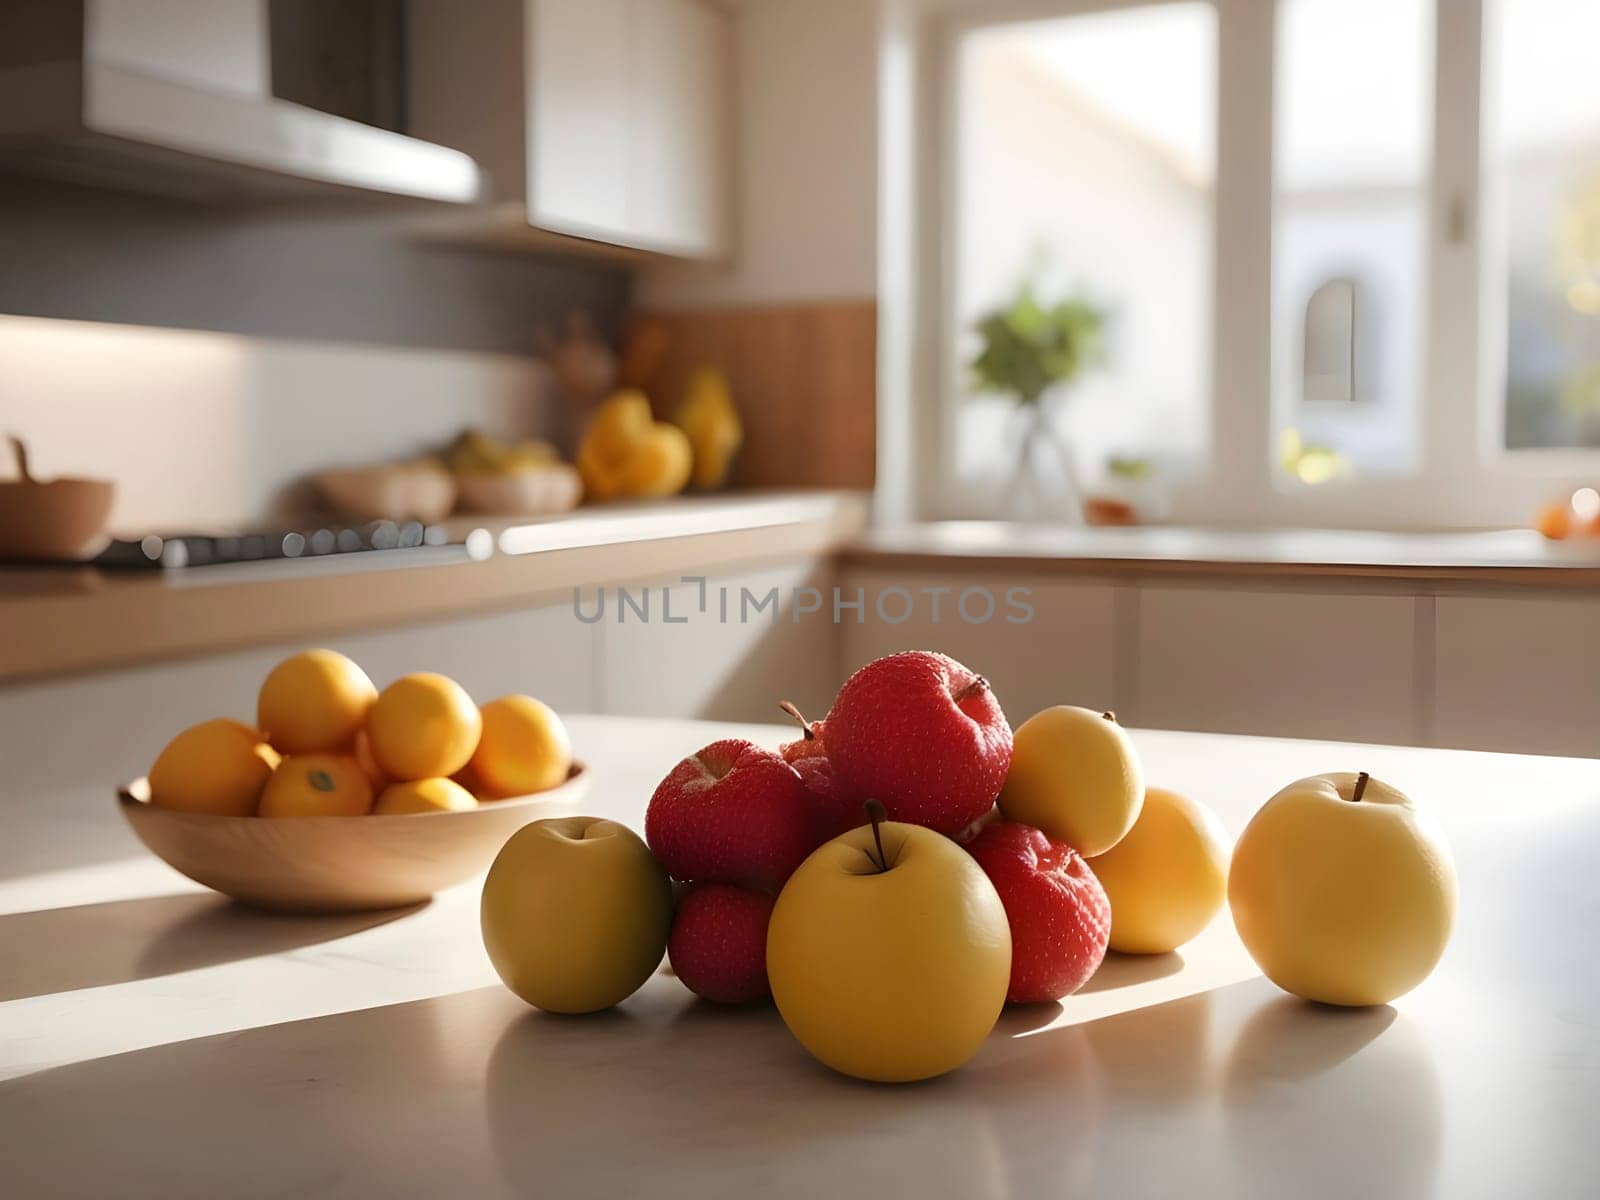 Warm Ambiance: Giaca Fruit Spotlight in a Sunlit, Defocused Kitchen Scene by mailos